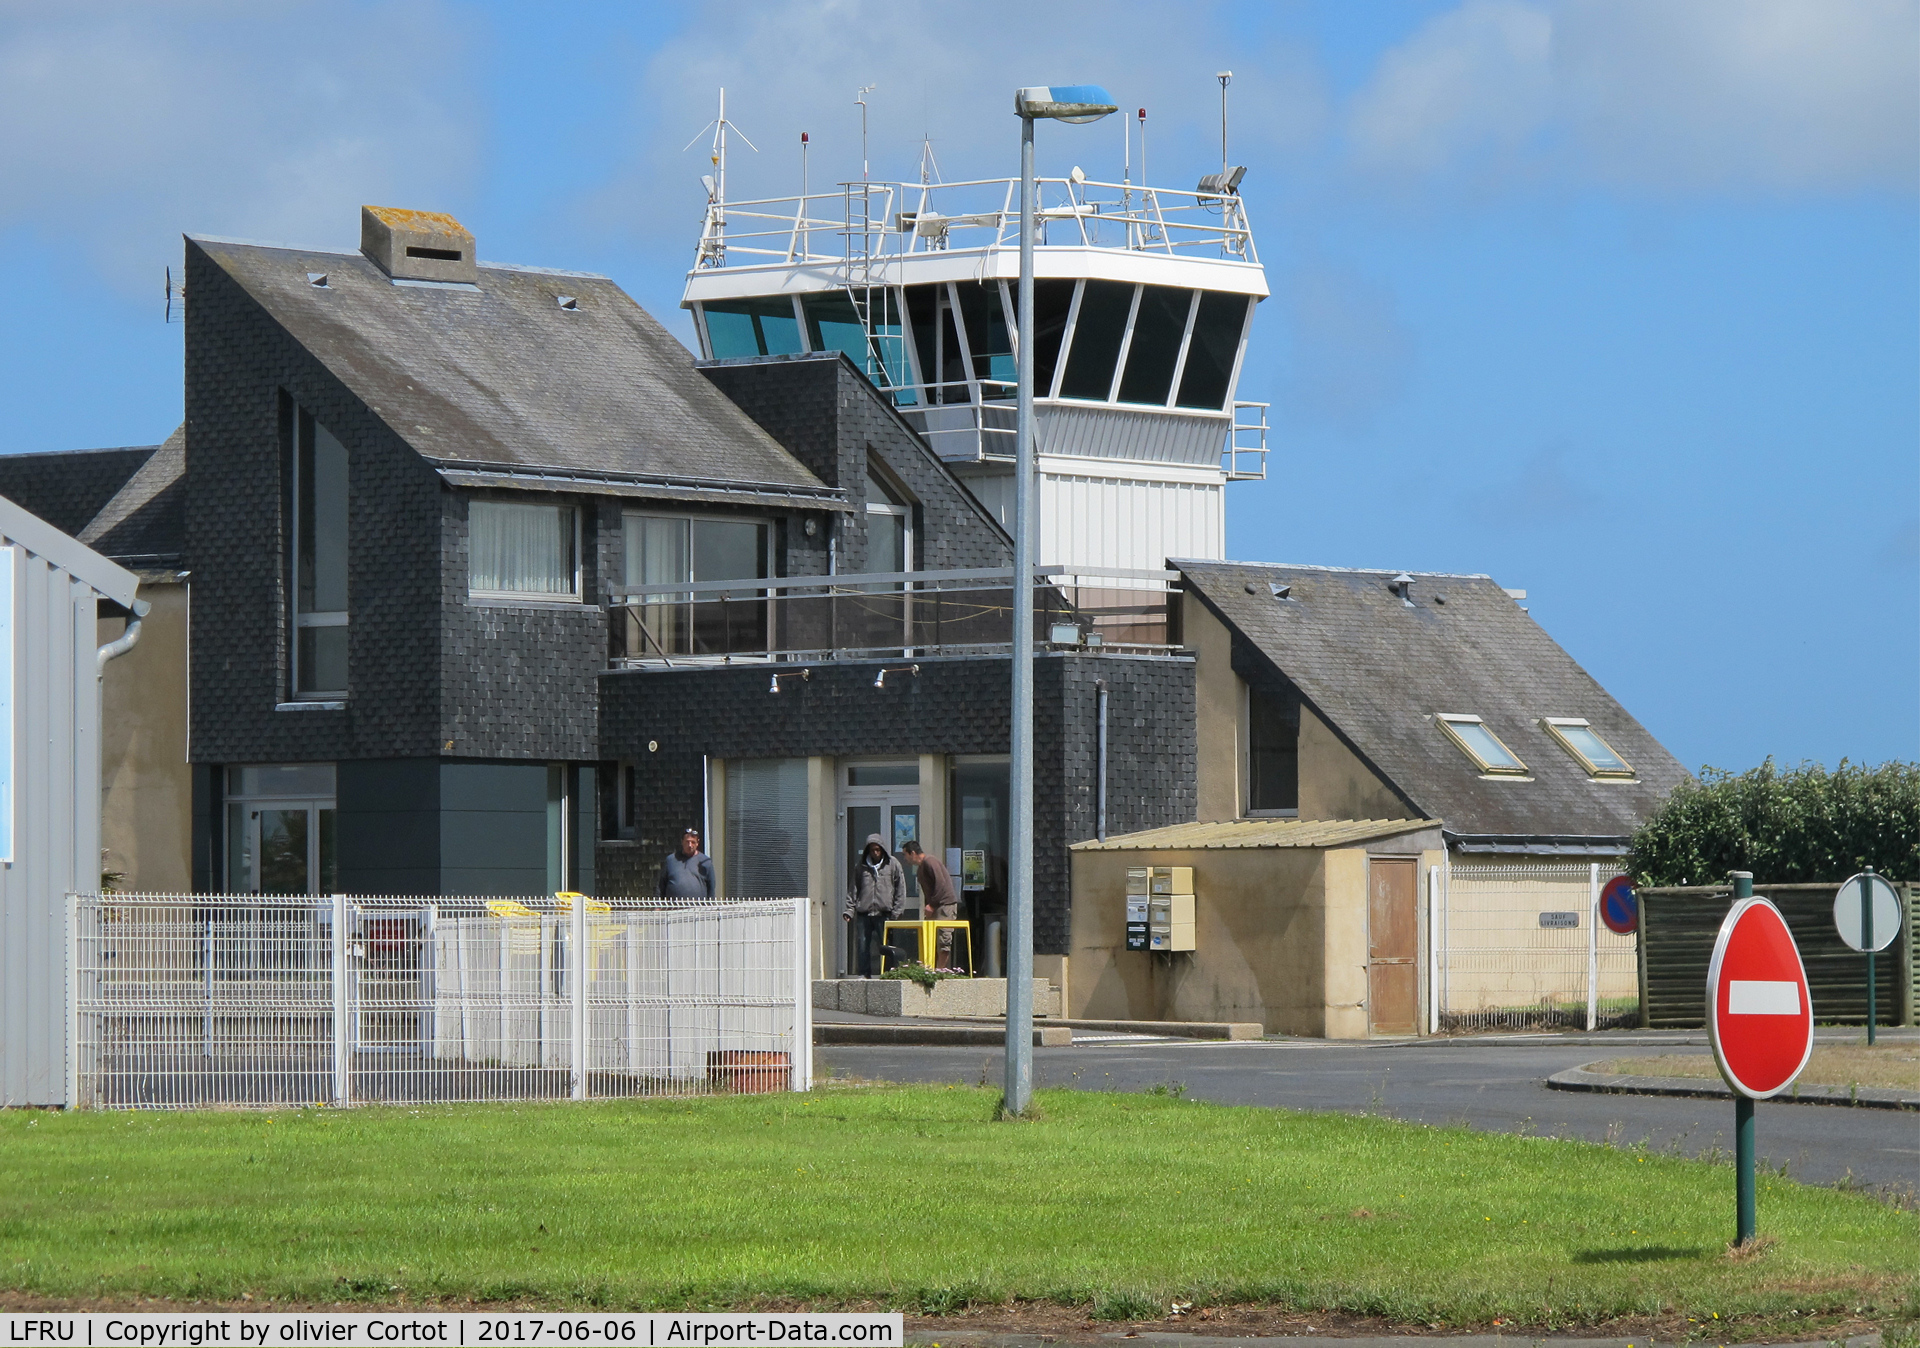 Morlaix Ploujean Airport, Morlaix France (LFRU) - the control tower